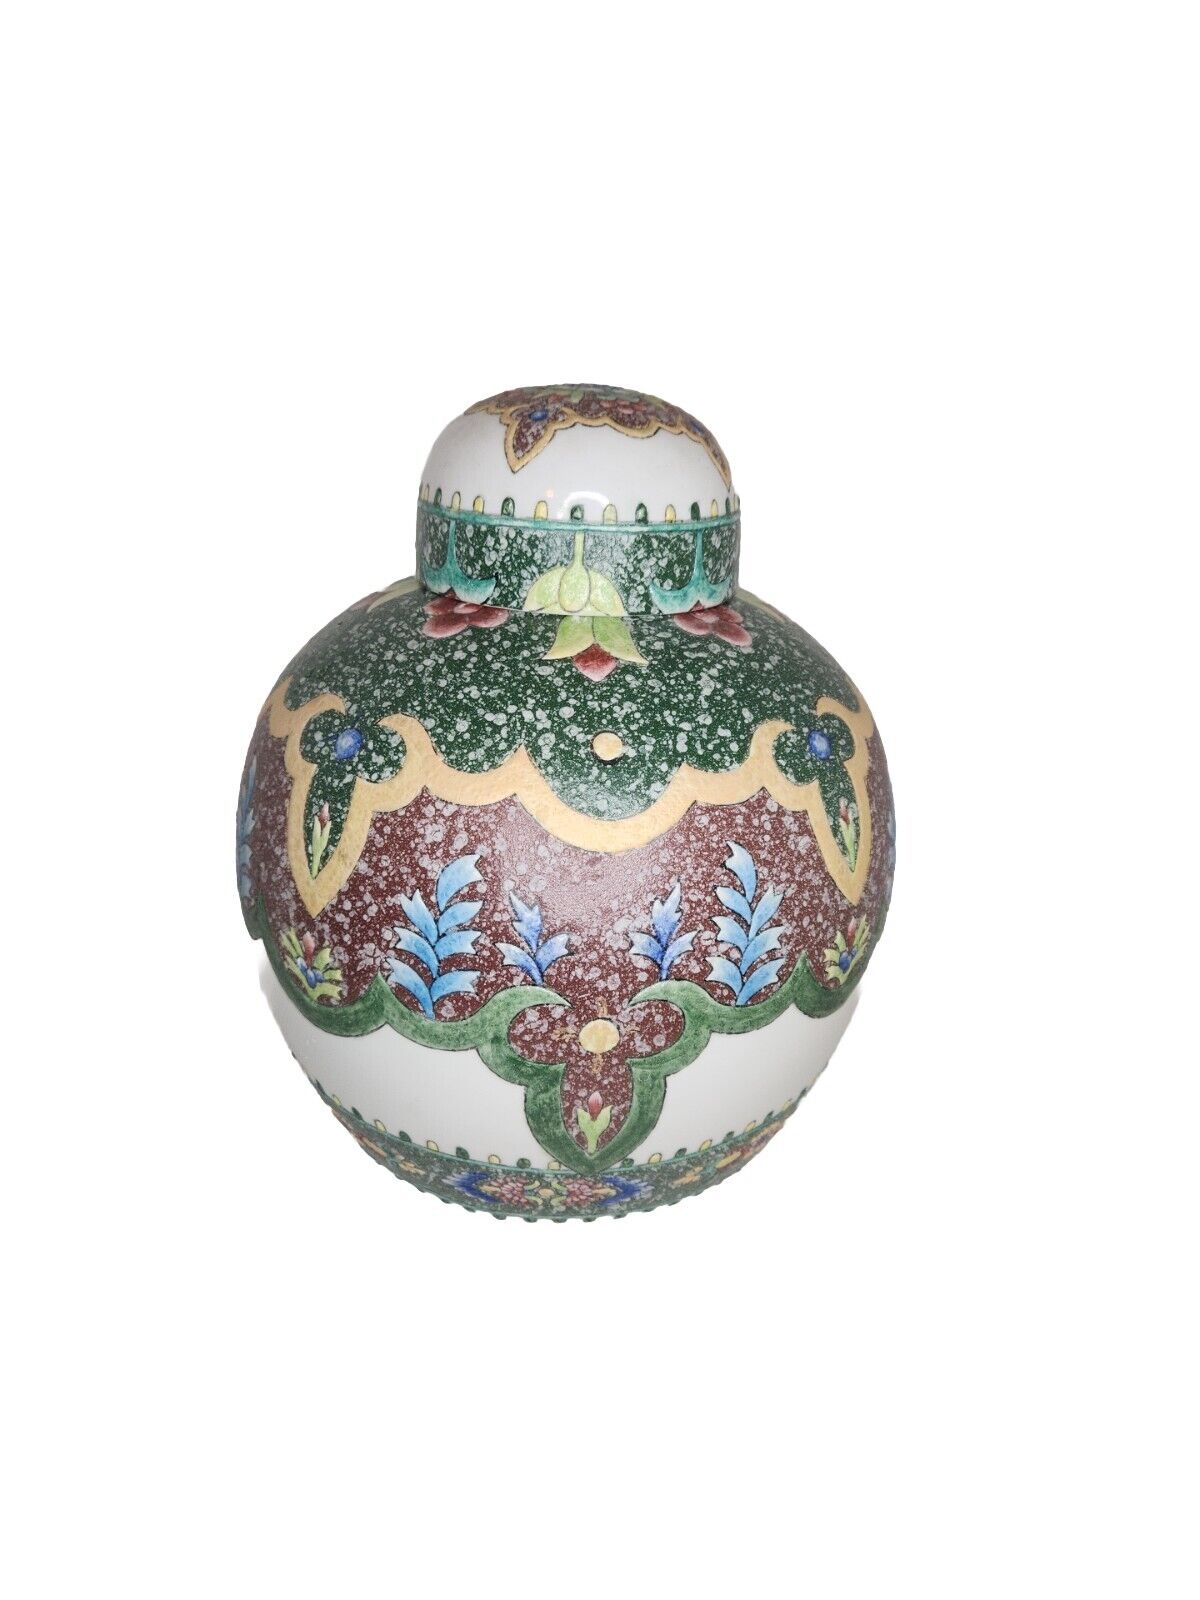 Giant 12x13 Chinese Porcelain Covered Ginger Jar Urn